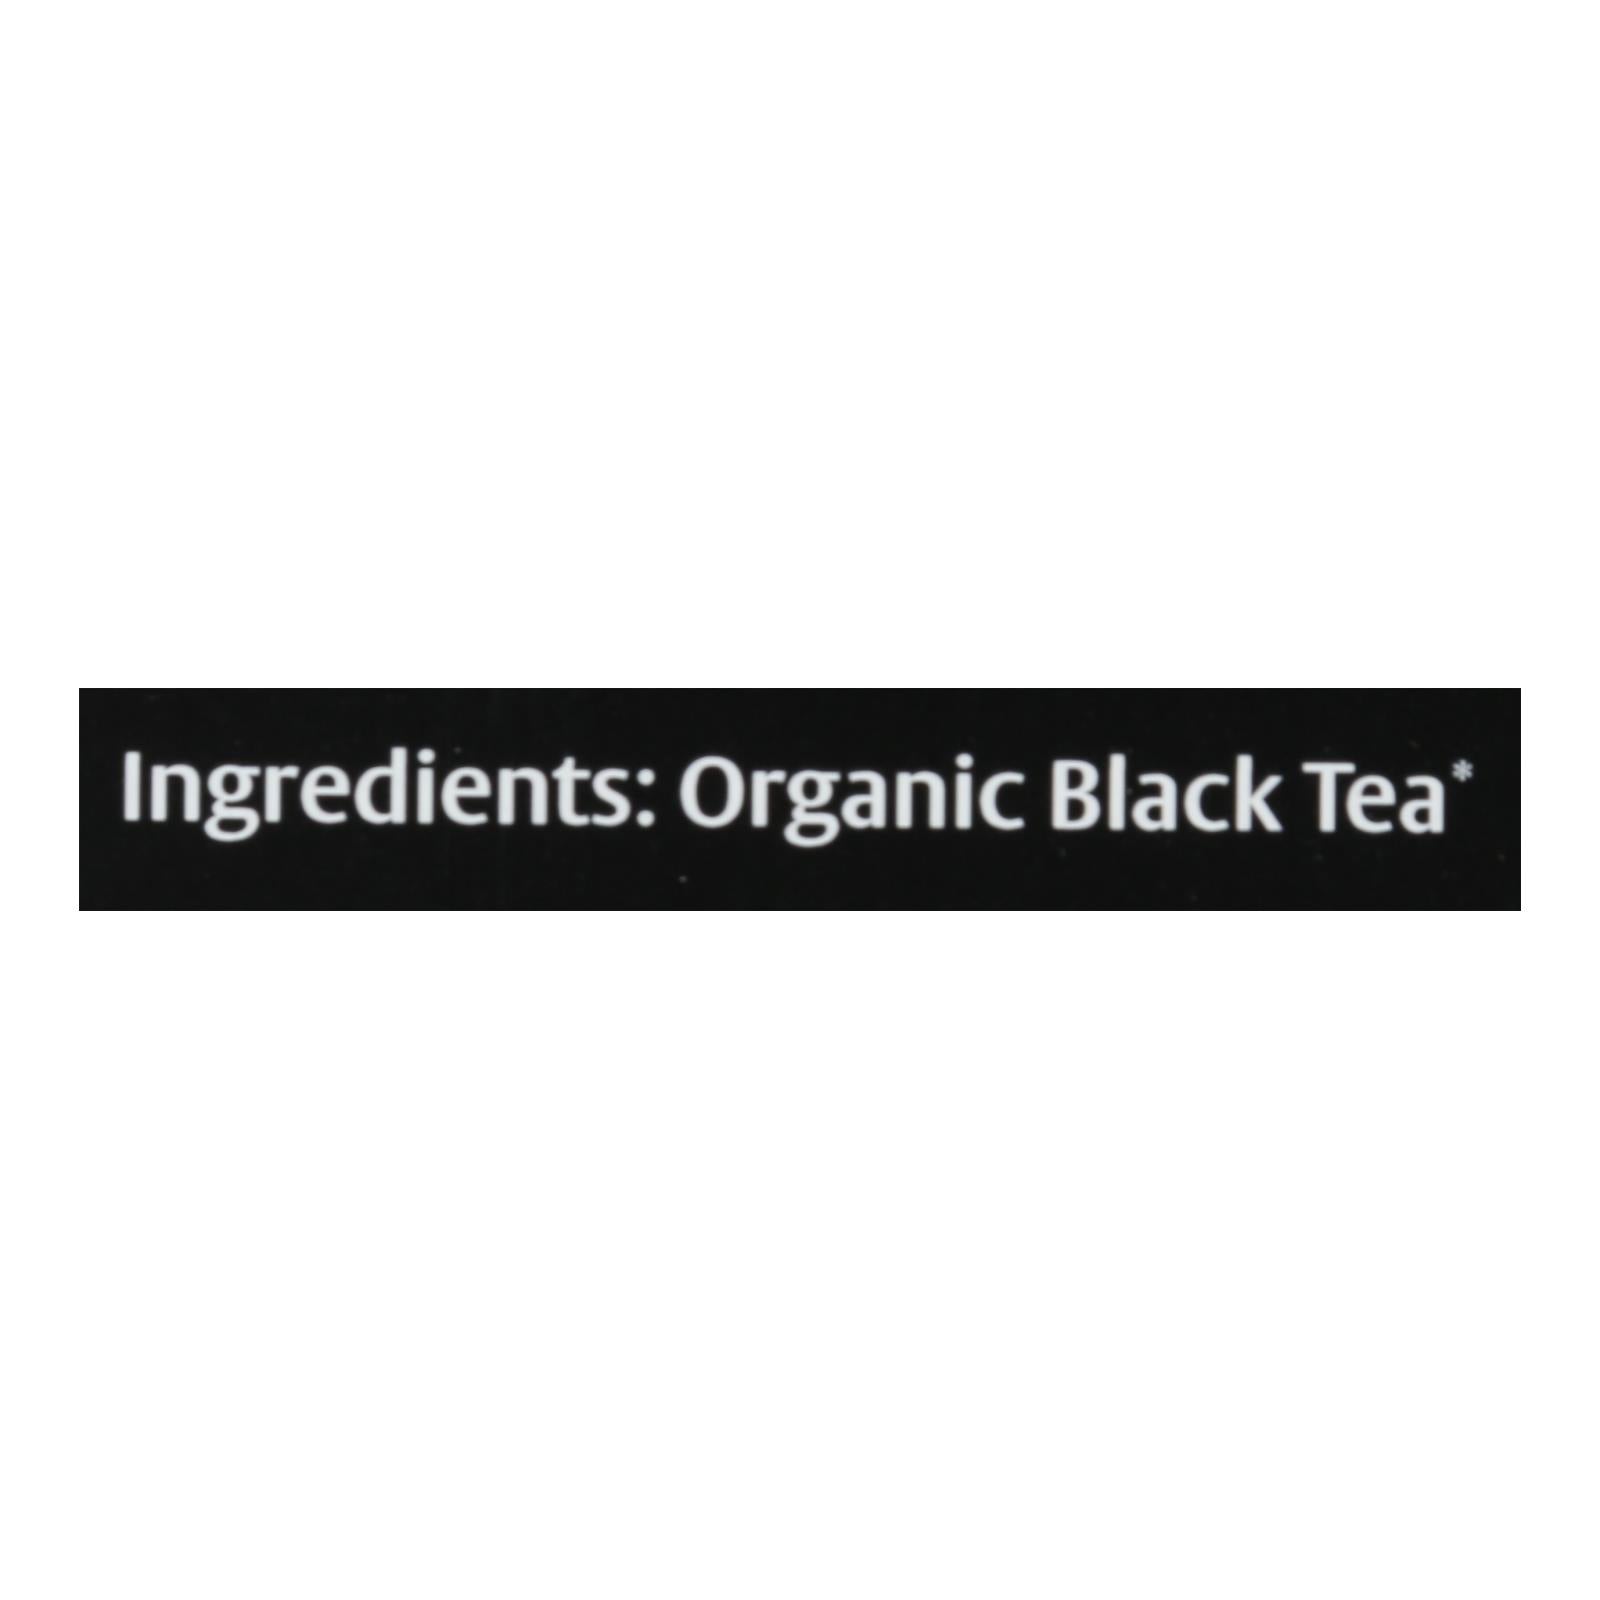 Choice Organic Teas English Breakfast Tea - 16 Tea Bags - Case Of 6